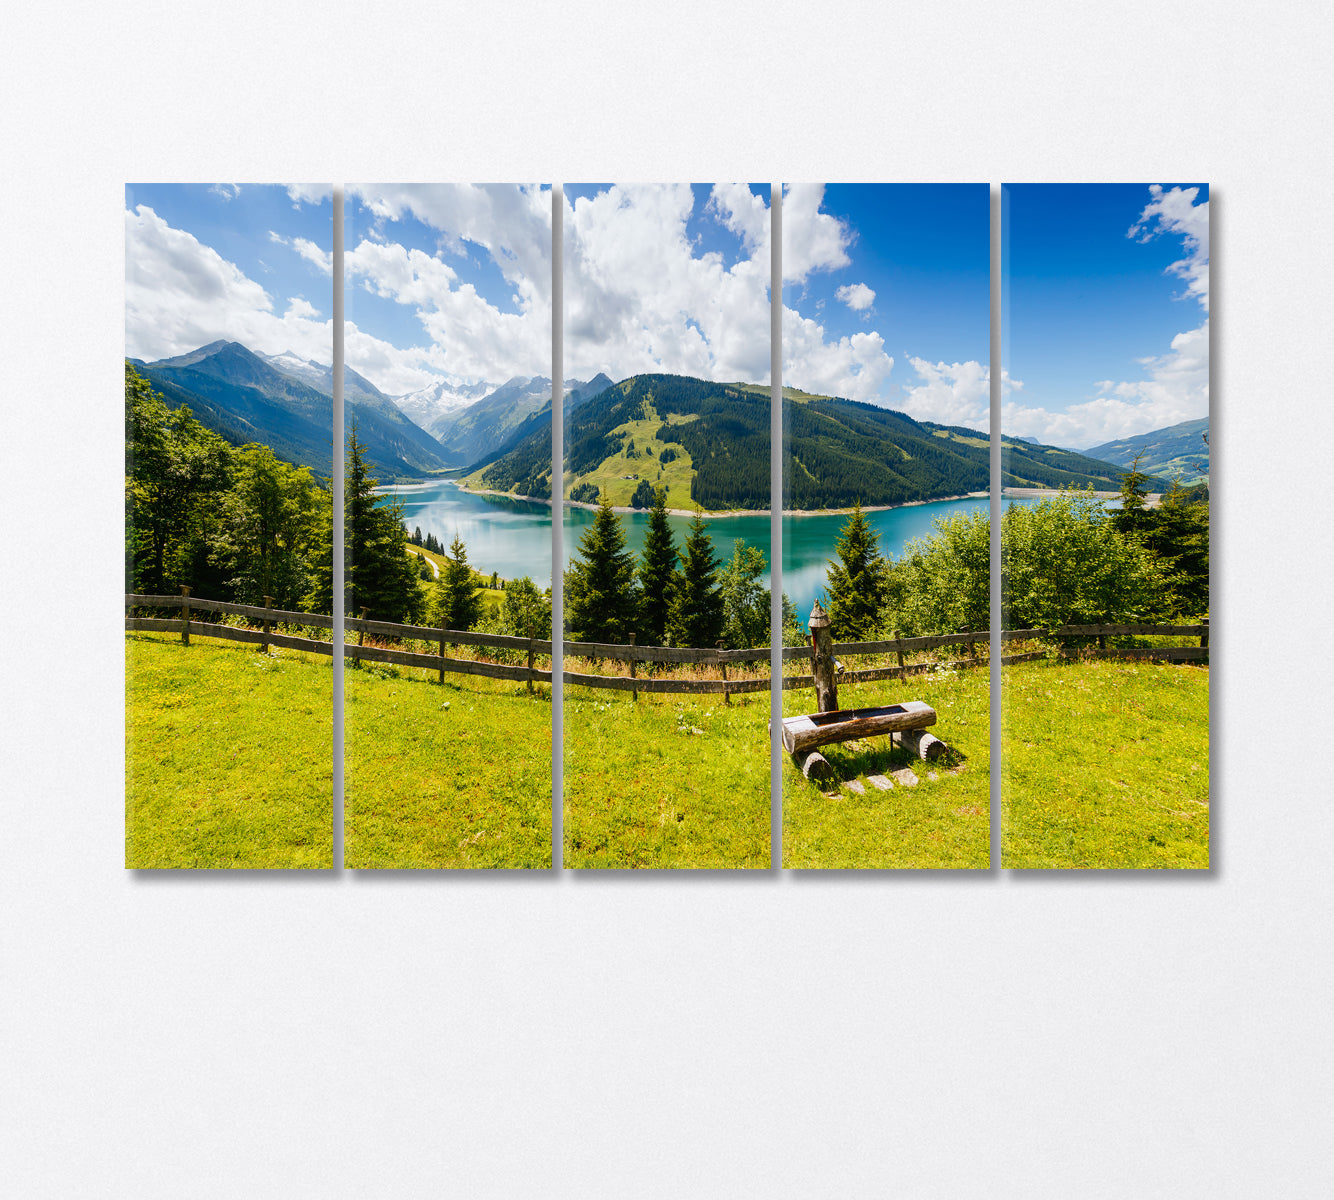 Hohe Tauern National Park Austria Canvas Print-Canvas Print-CetArt-5 Panels-36x24 inches-CetArt